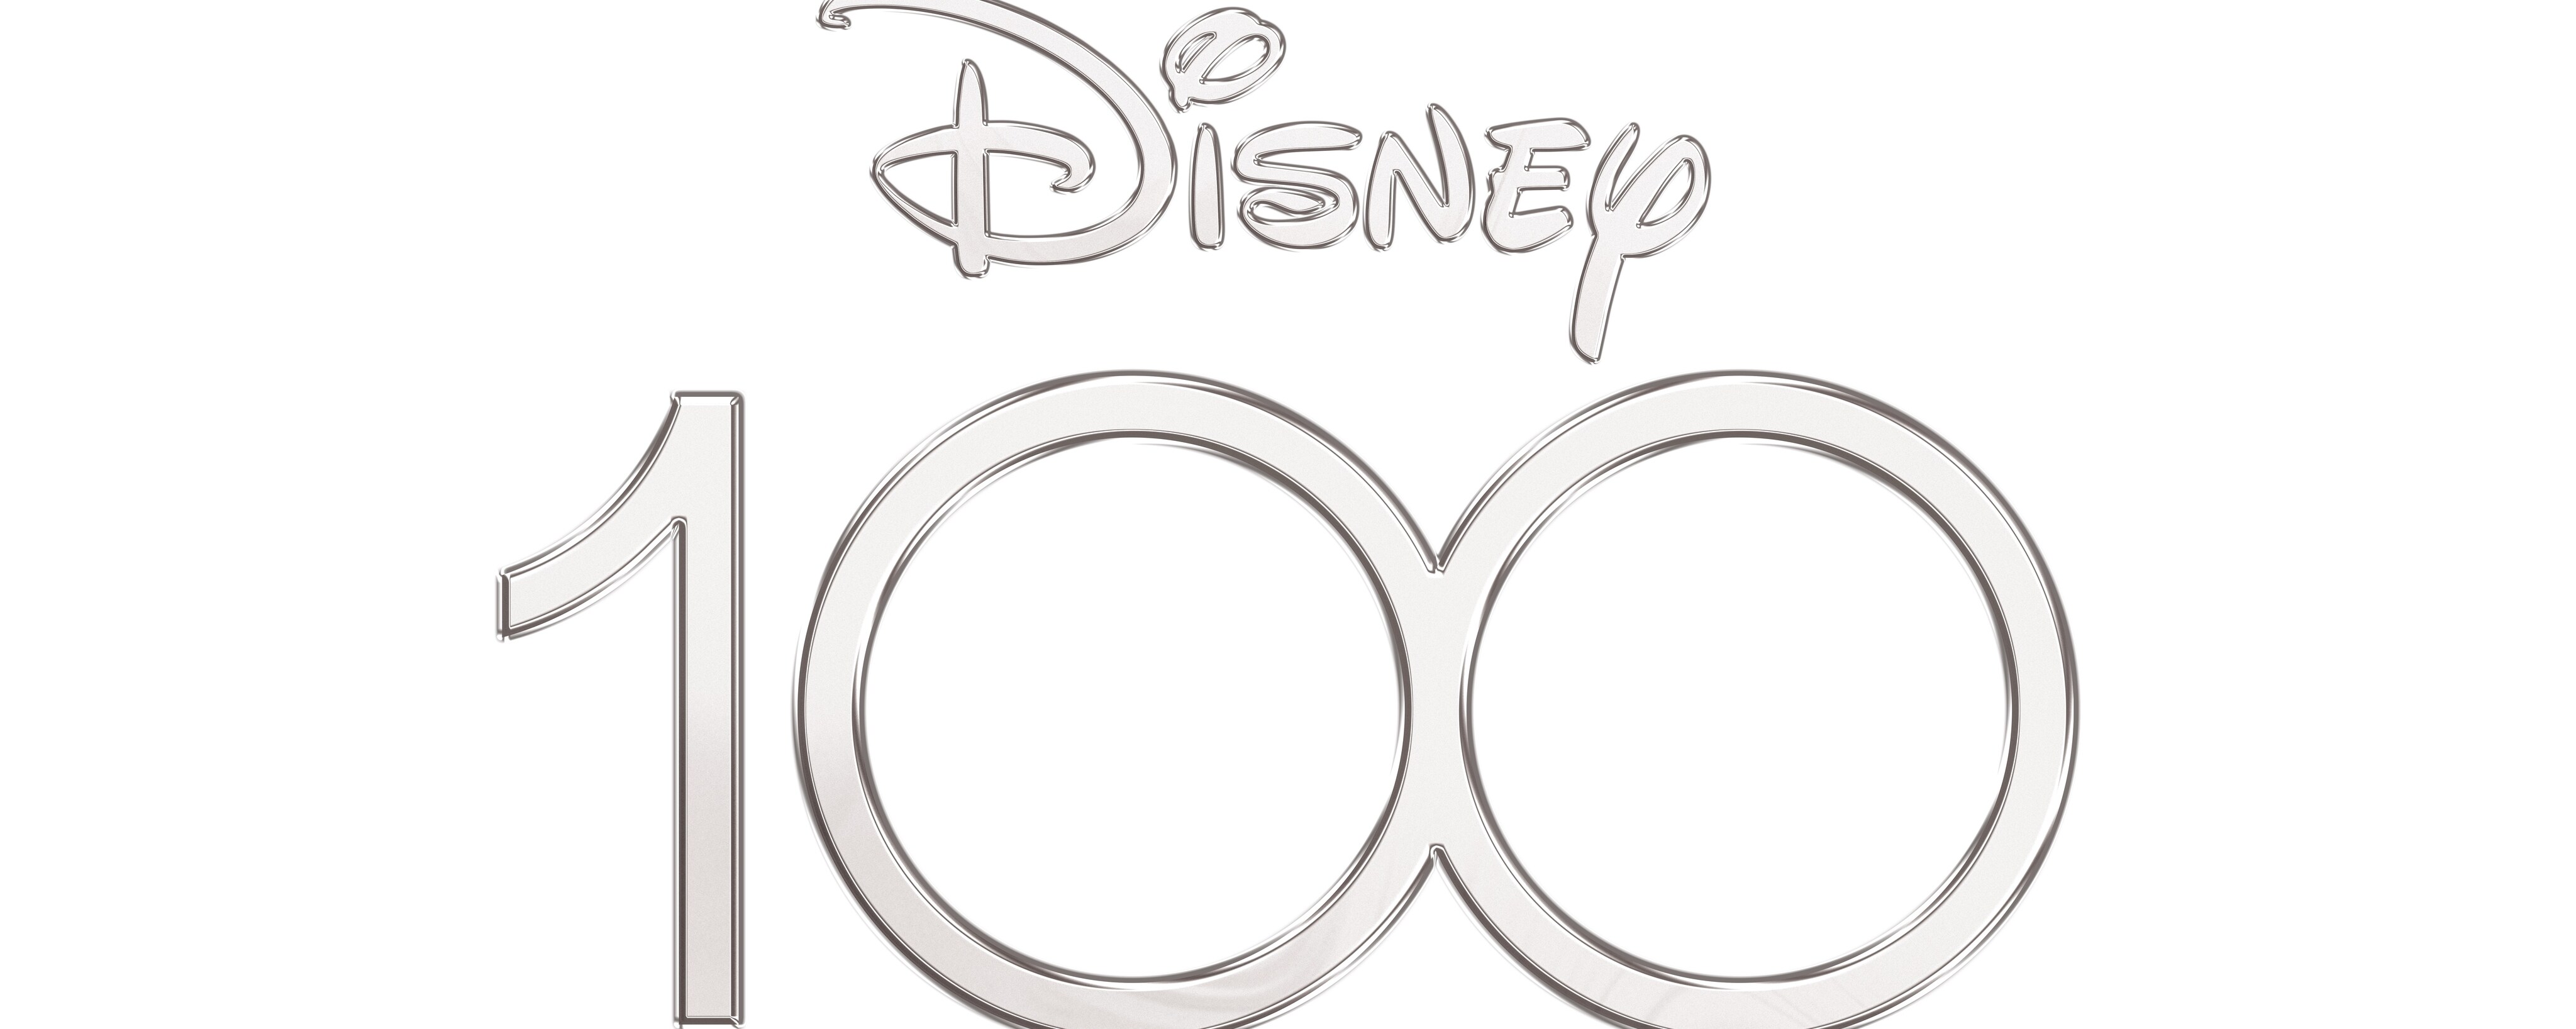 Disney100 - Official Anniversary Trailer 